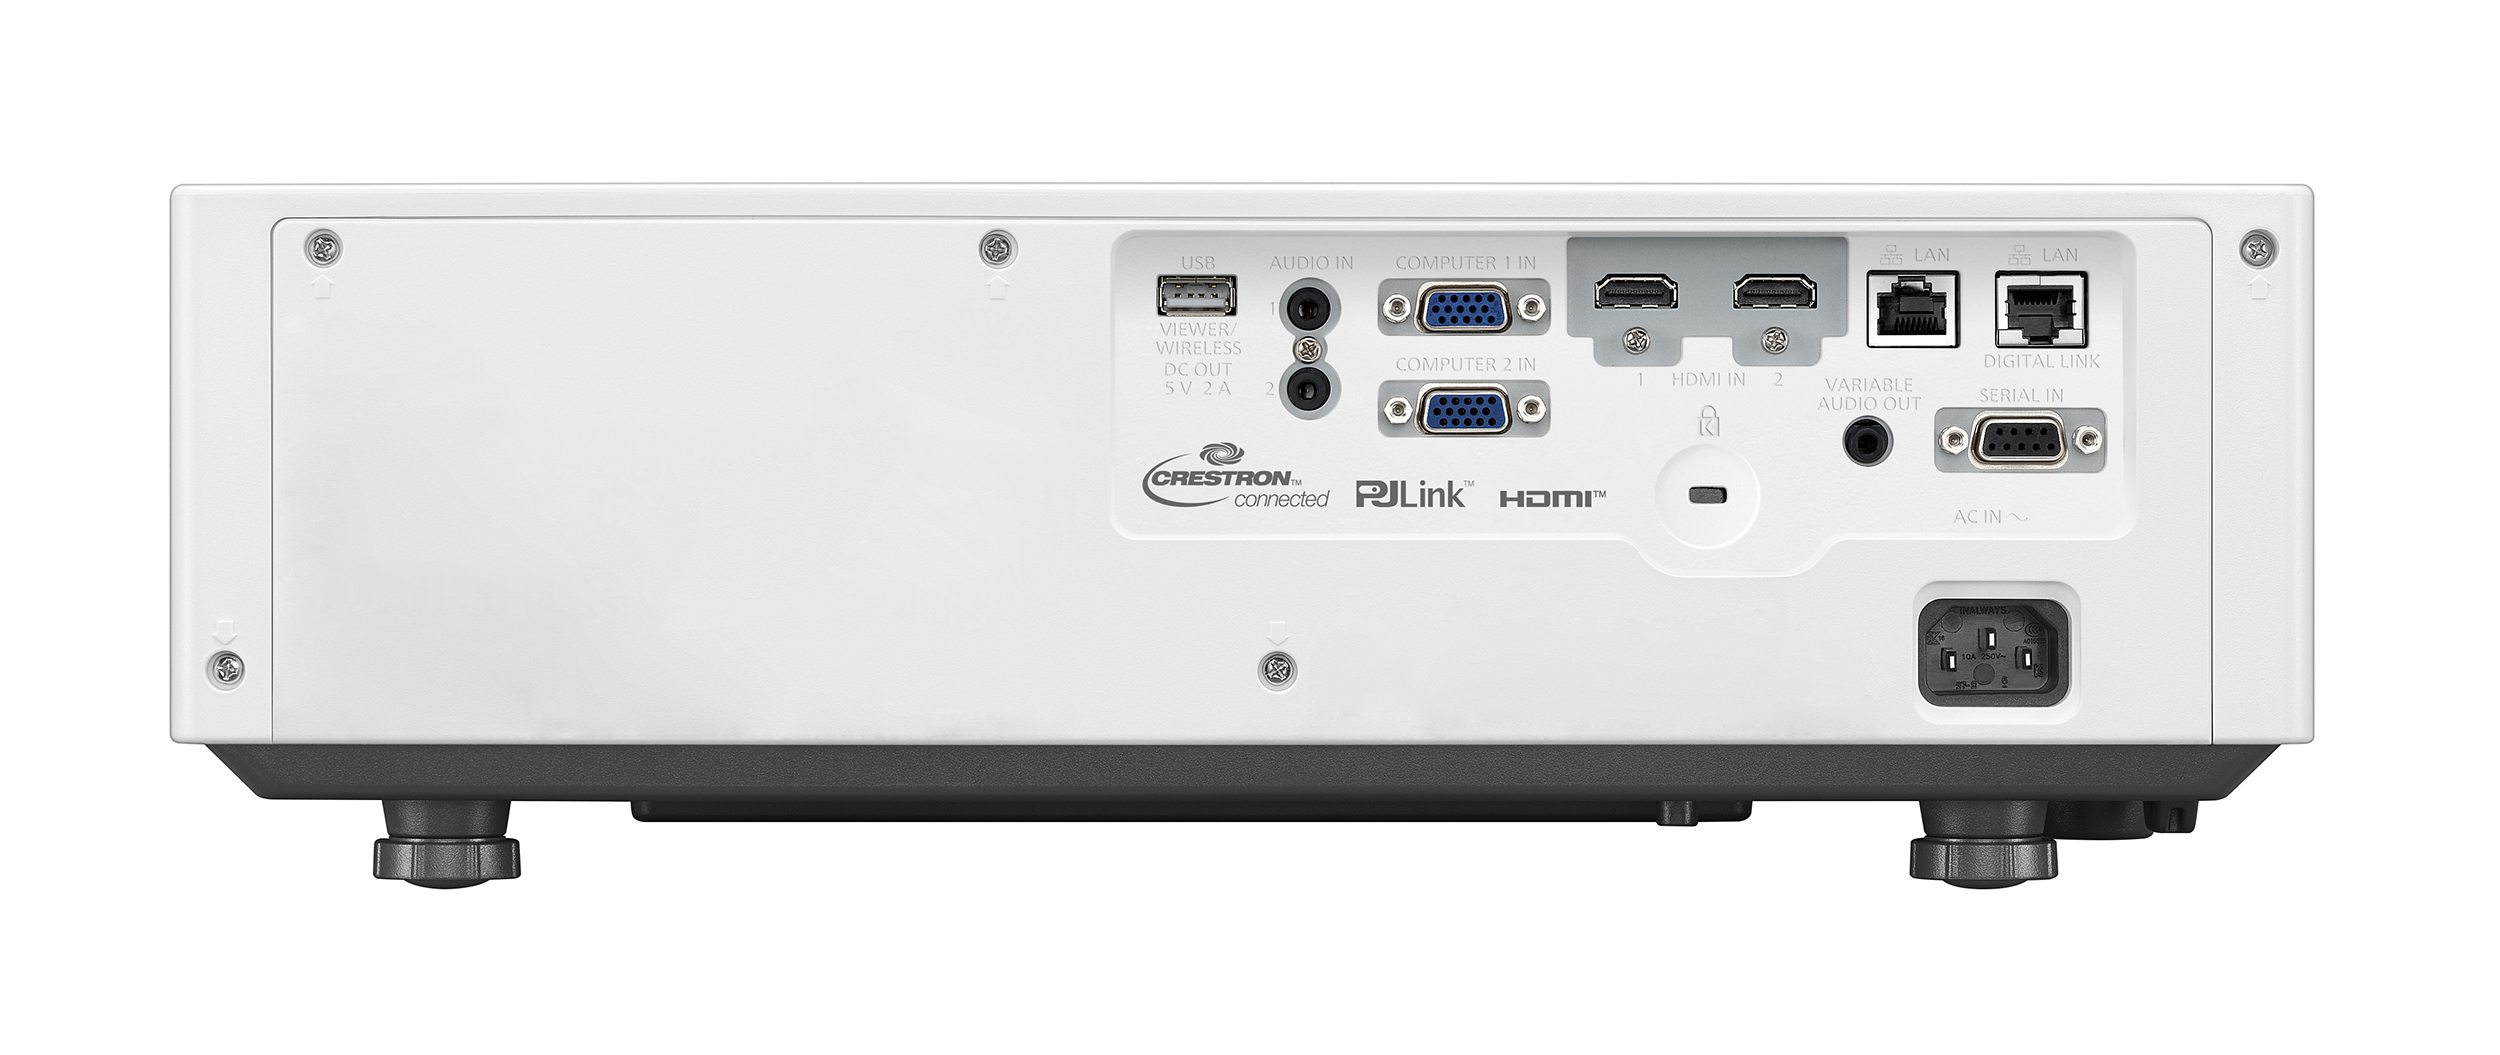 Panasonic PT-VMZ71EJ - WUXGA - 7000 Ansi - Laser - LCD Projector - White